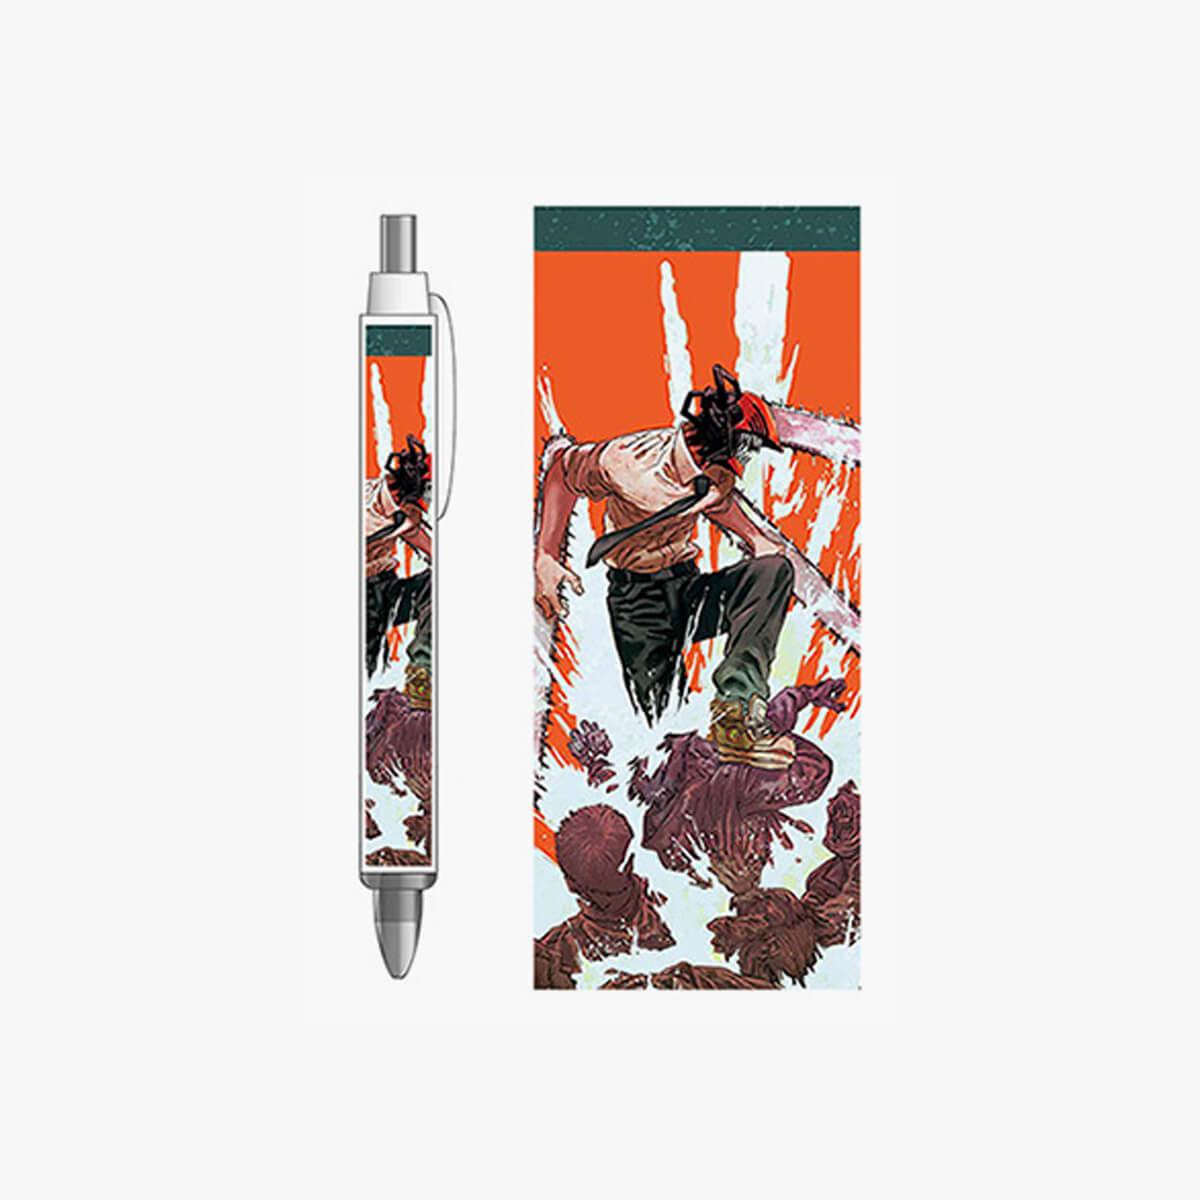 Chainsaw Man Anime Ballpoint Pen - Aesthetic Clothes Shop